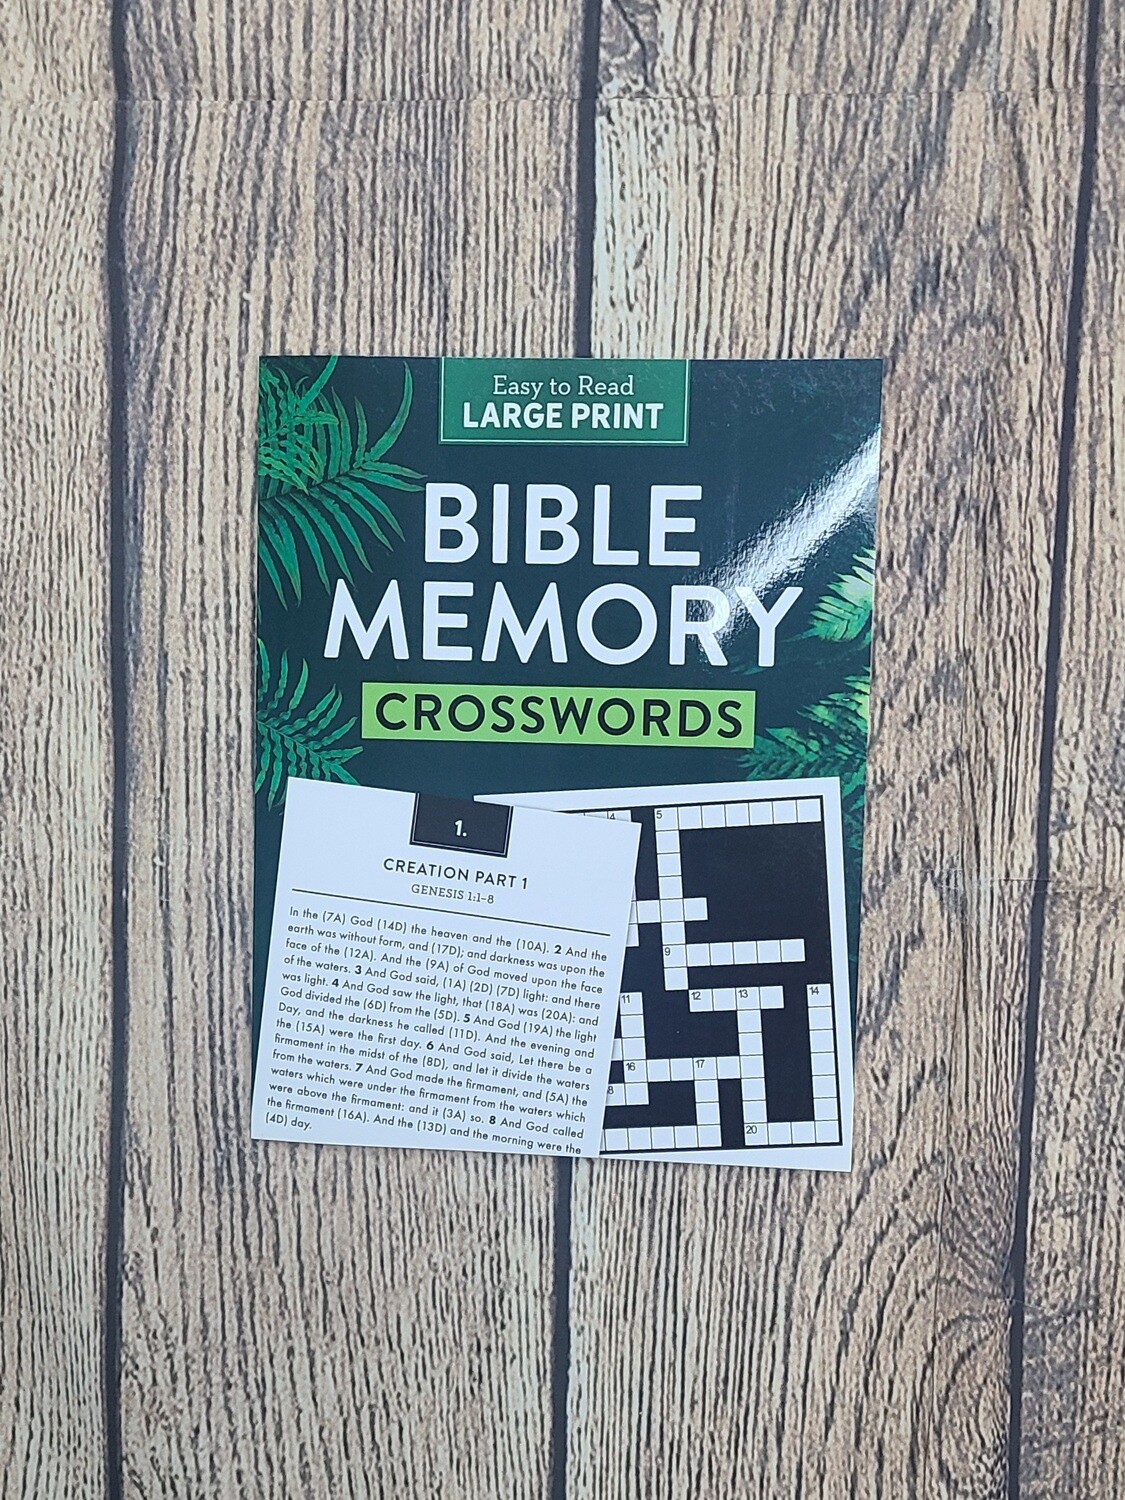 Bible Memory Crosswords - Large Print